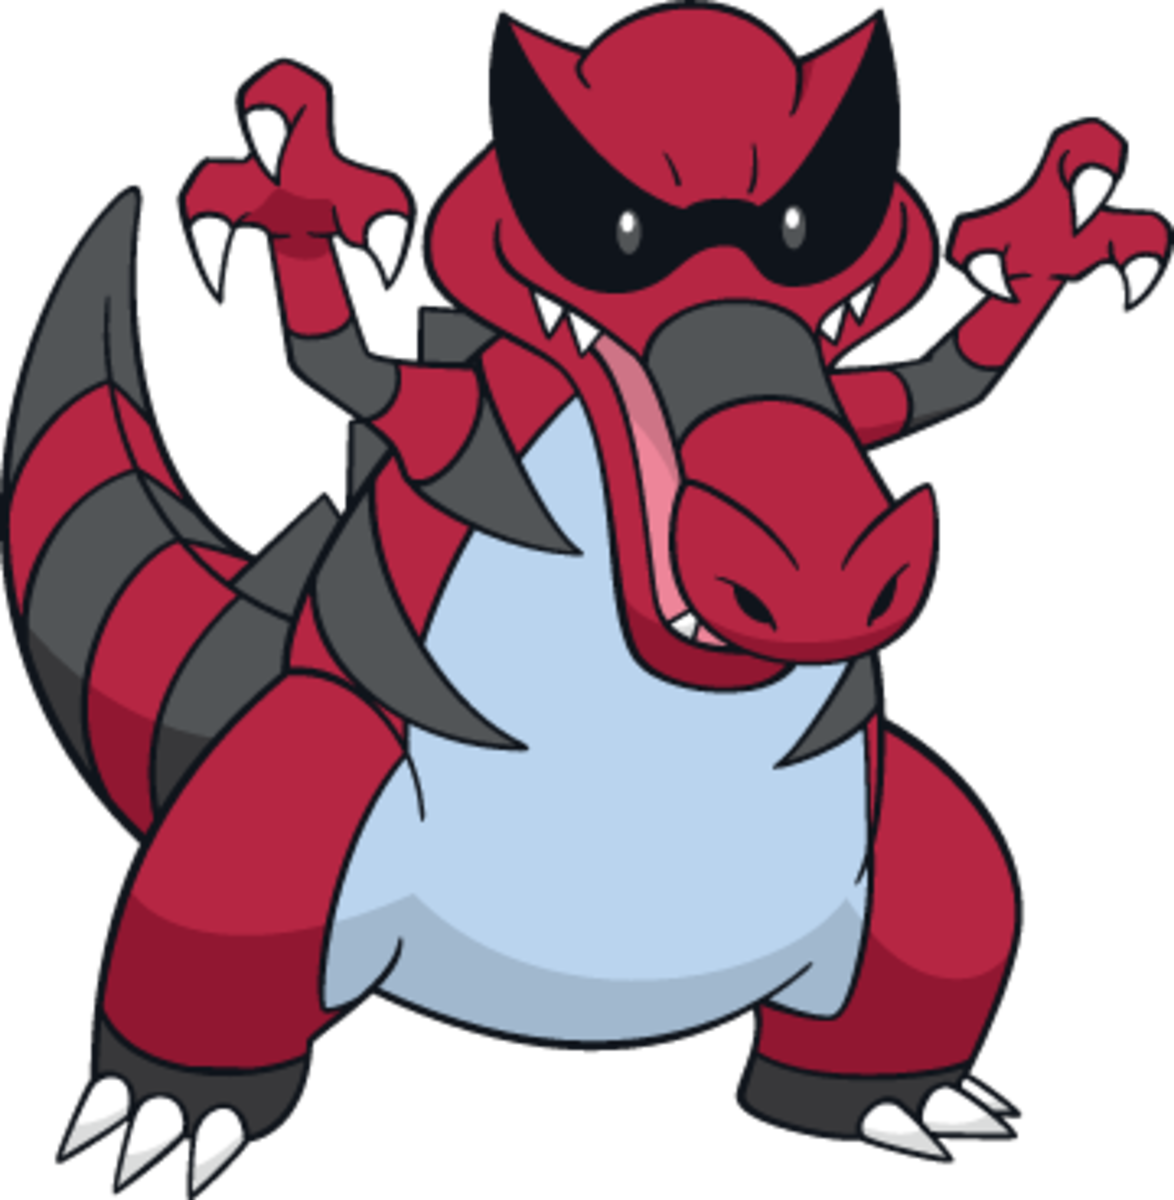 Krookodile, the "Intimidation" Pokémon